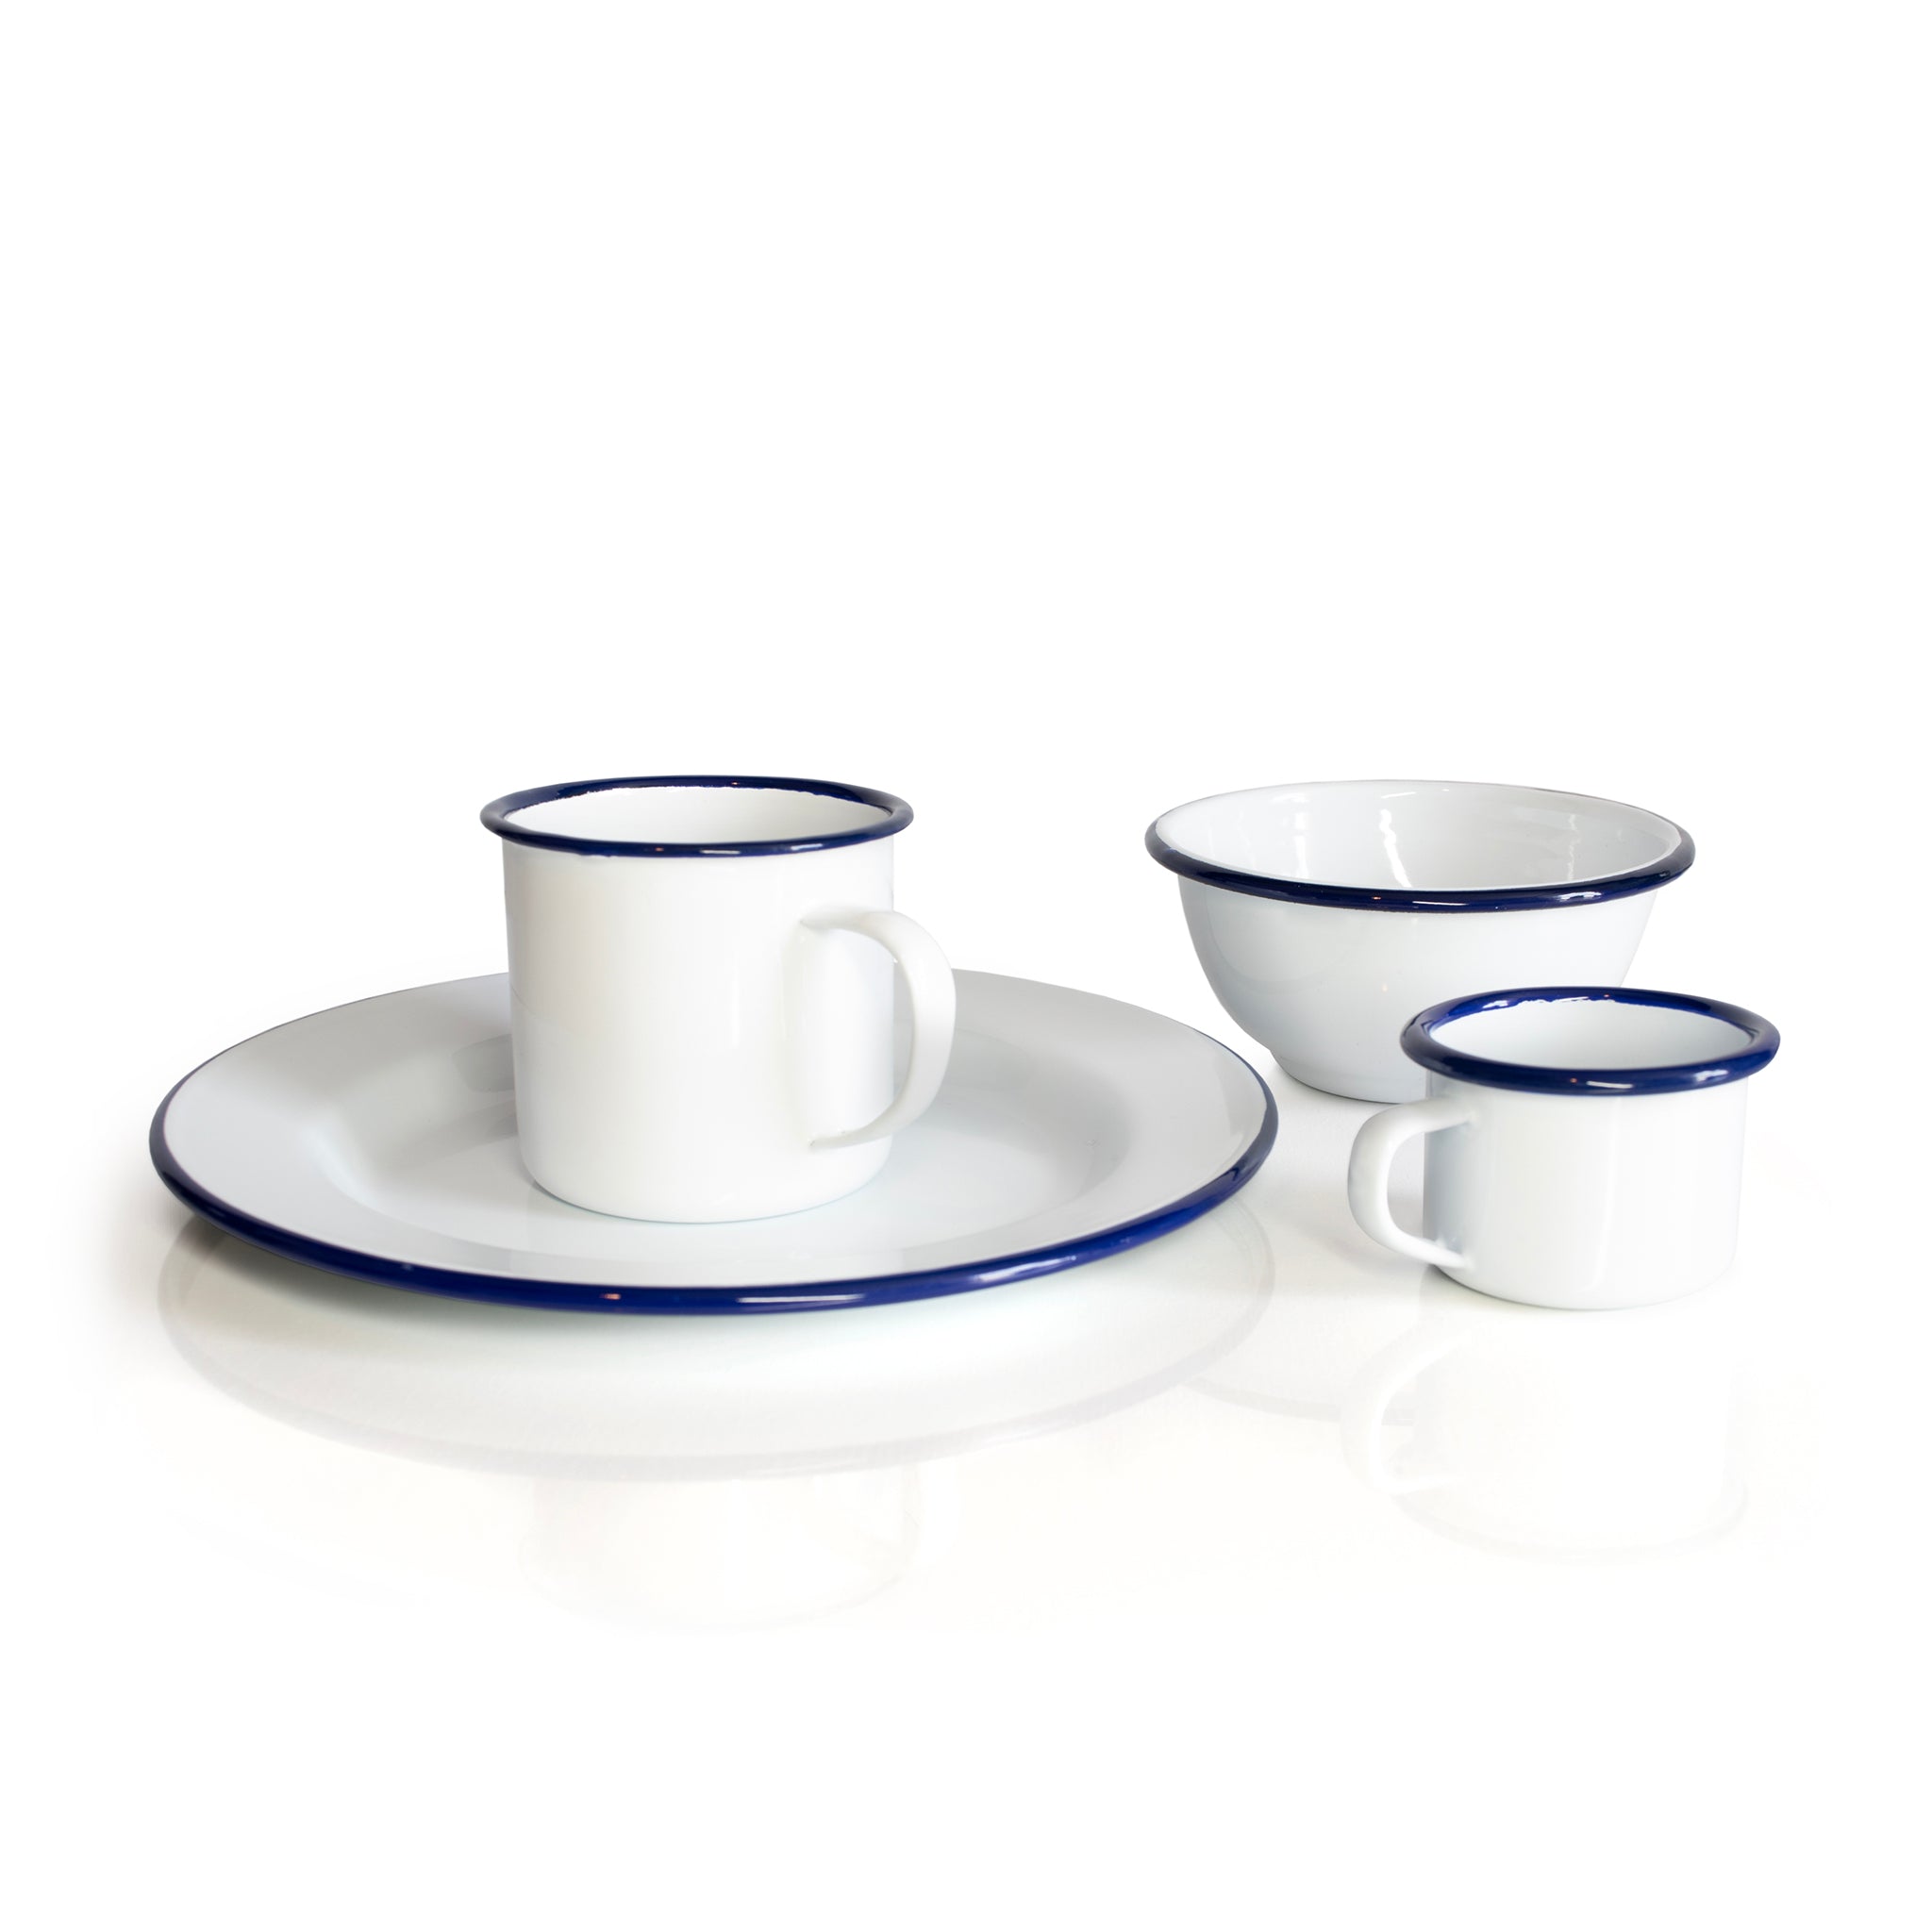 Enamel tableware set white with blue rim